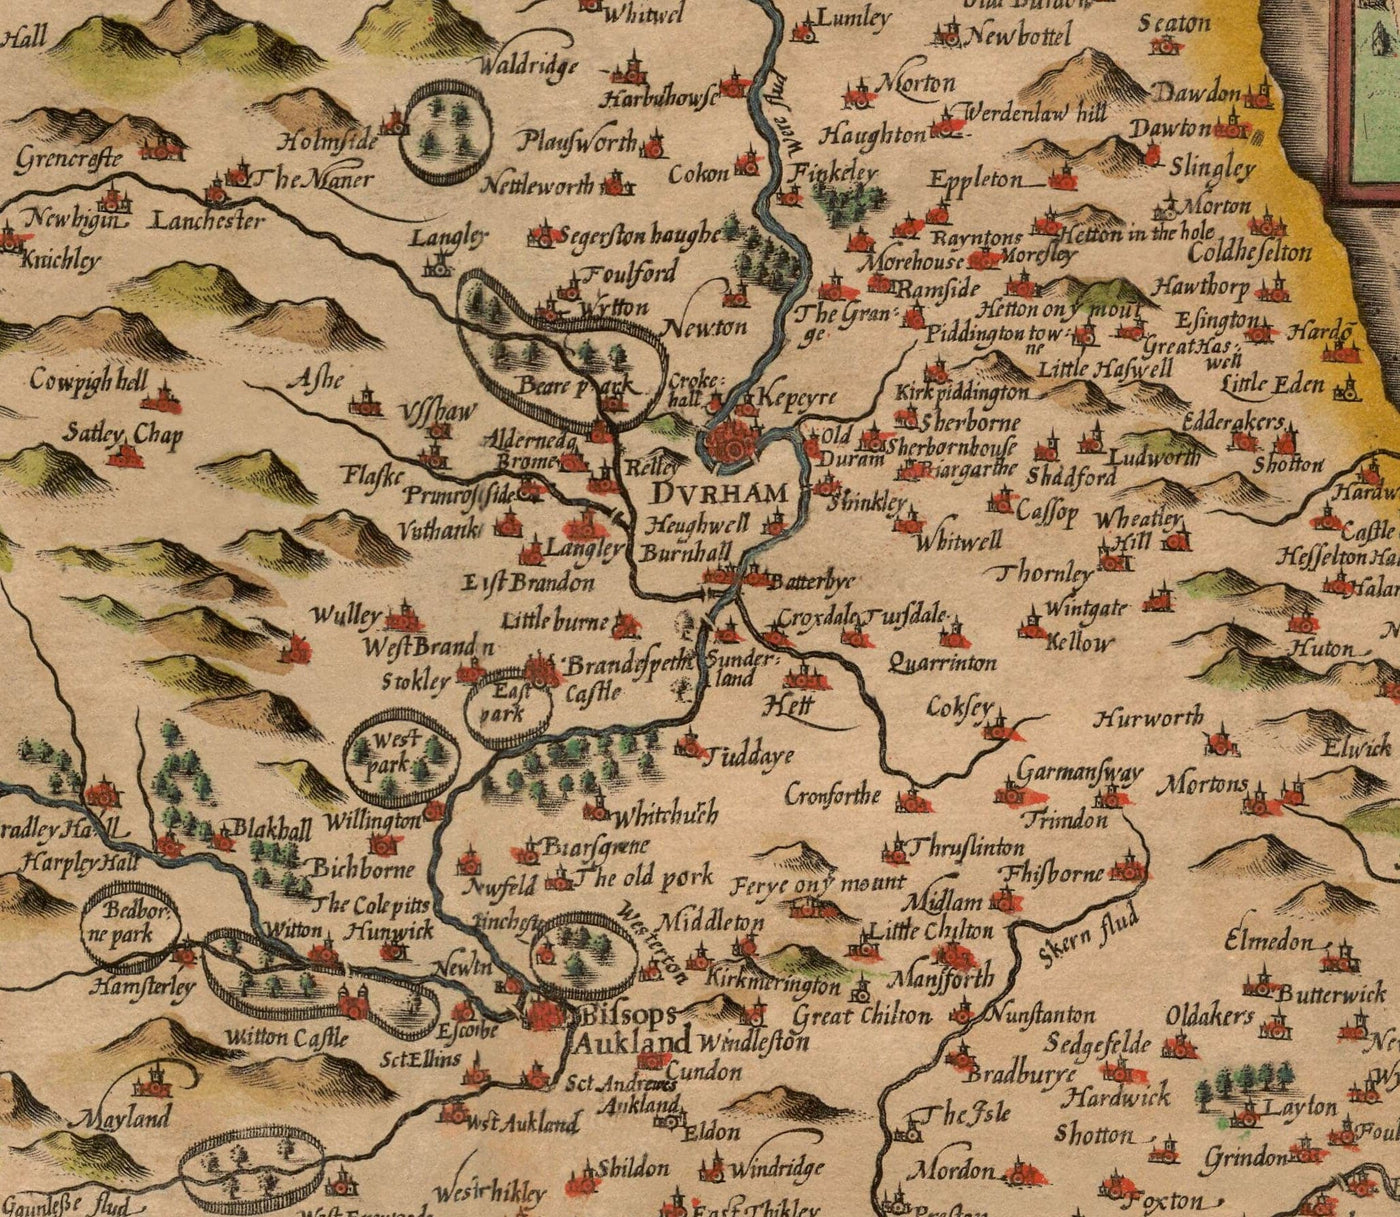 Mapa antiguo del condado Durham, 1611 de John Speed ​​- Darlington, Stockton-on-Tees, Sunderland